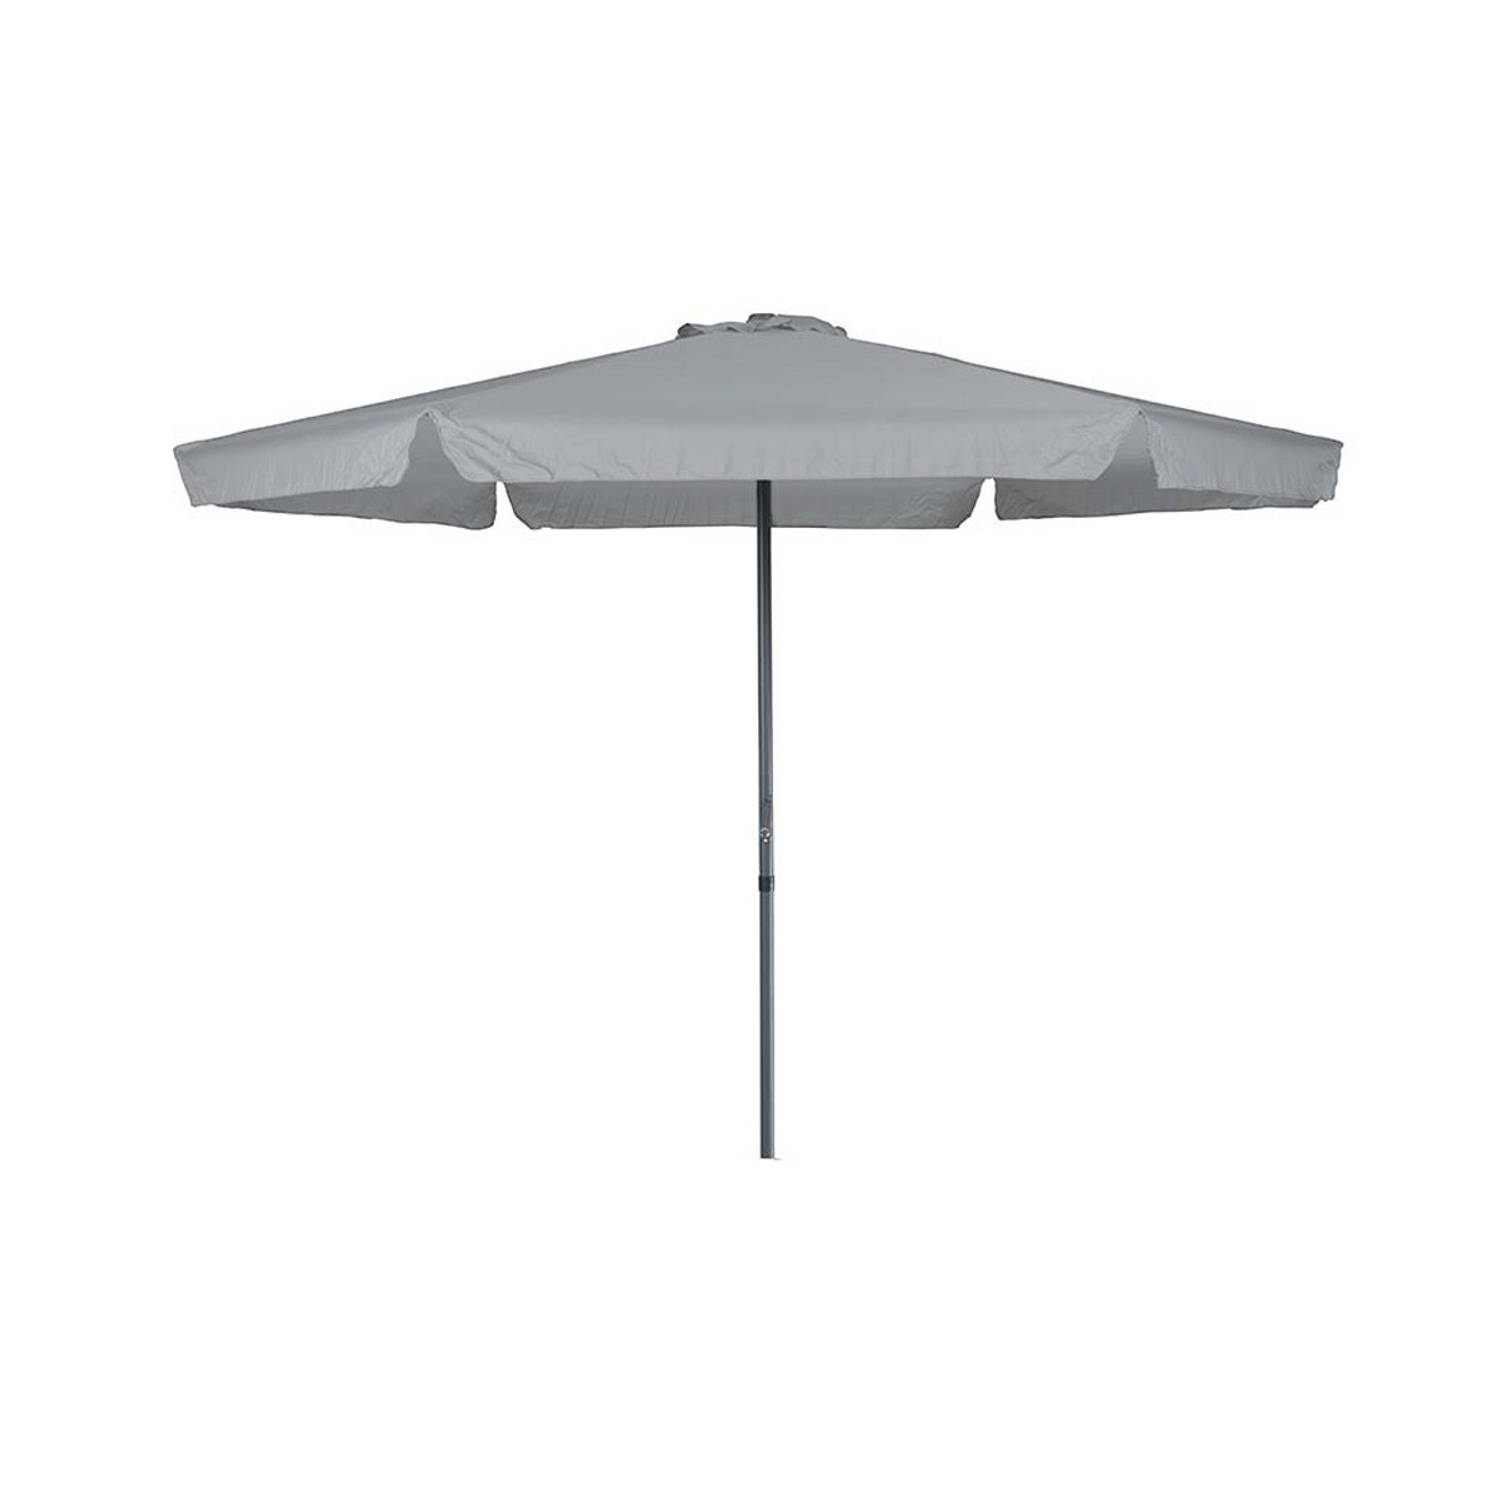 Garden Impressions Delta parasol Ø300 carbon black- licht grijs (50546SP)